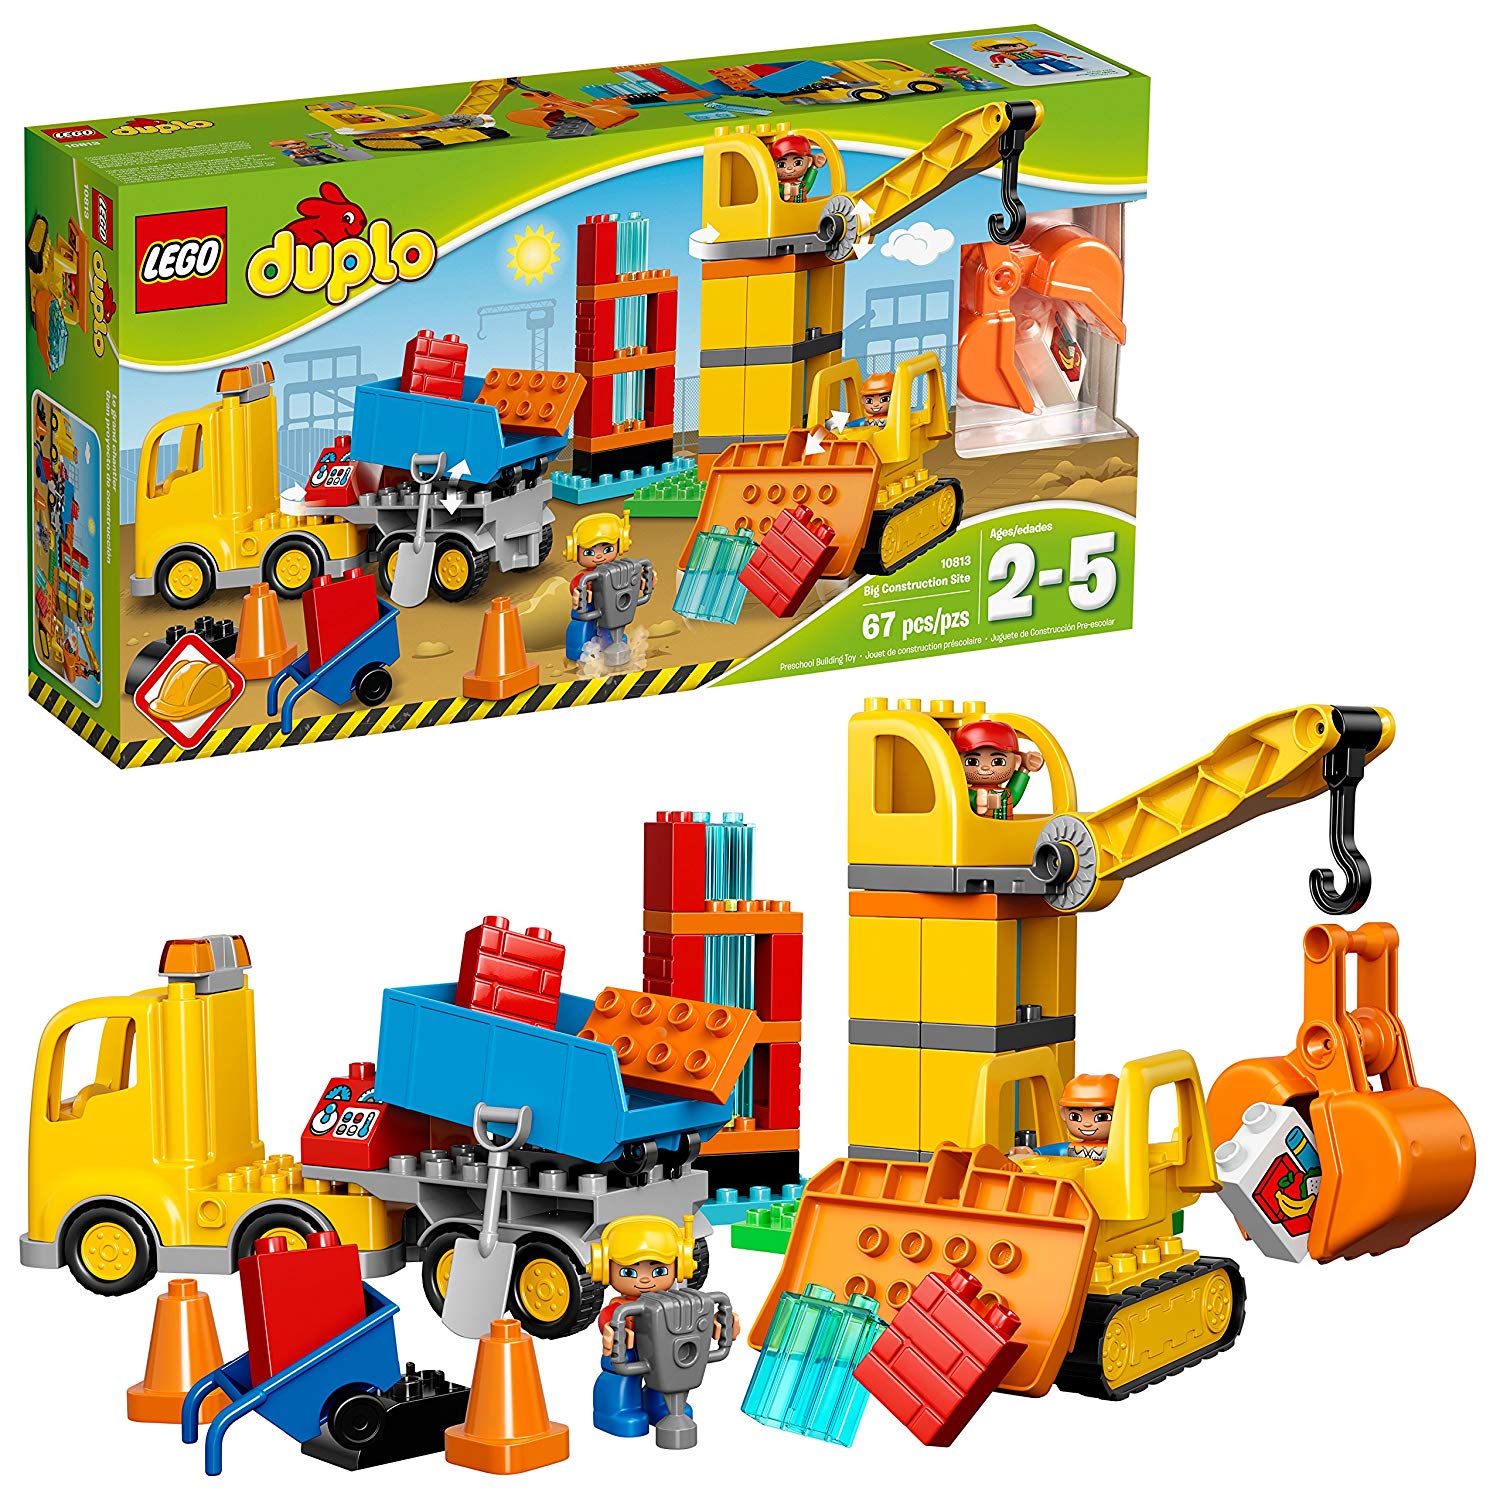 LEGO Duplo Big Construction Site 10813 Toddler Construction Toy Set with Toy Dump Truck, Crane and Bulldozer (67 Pieces) $̶4̶9̶.̶9̶9̶ $27.99